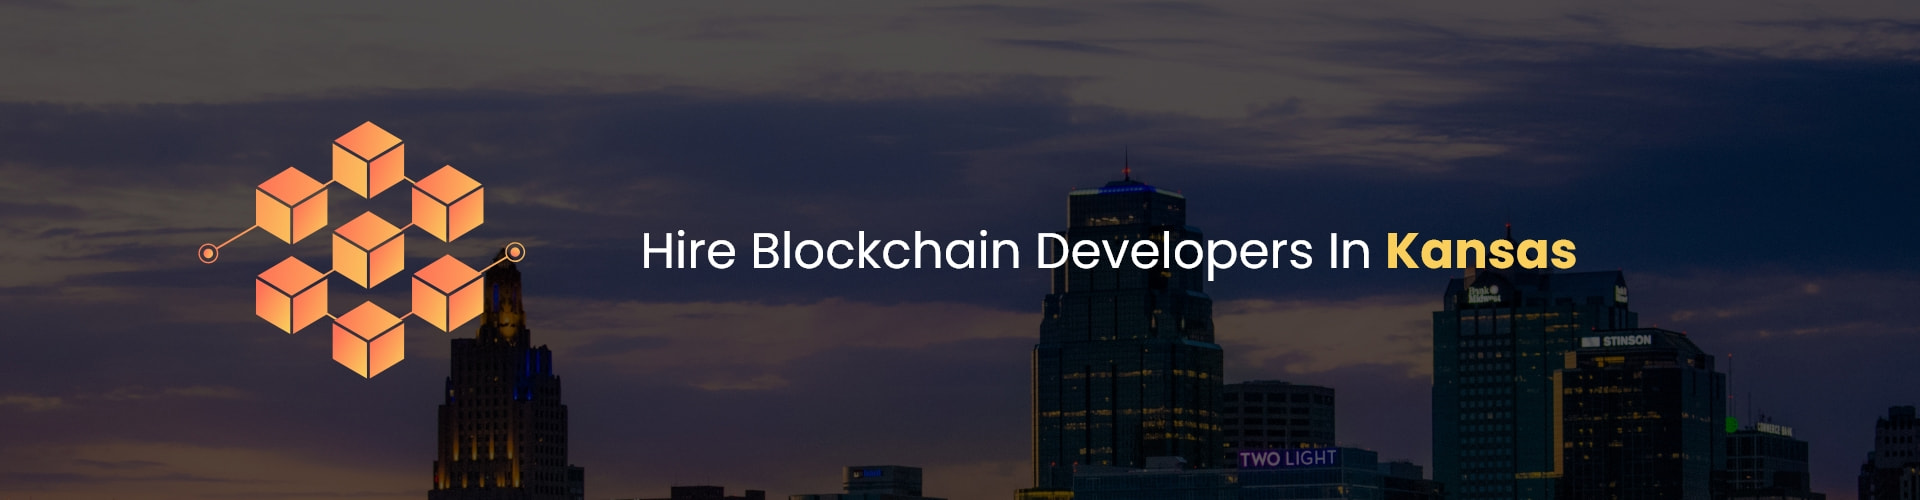 hire blockchain developers in kansas